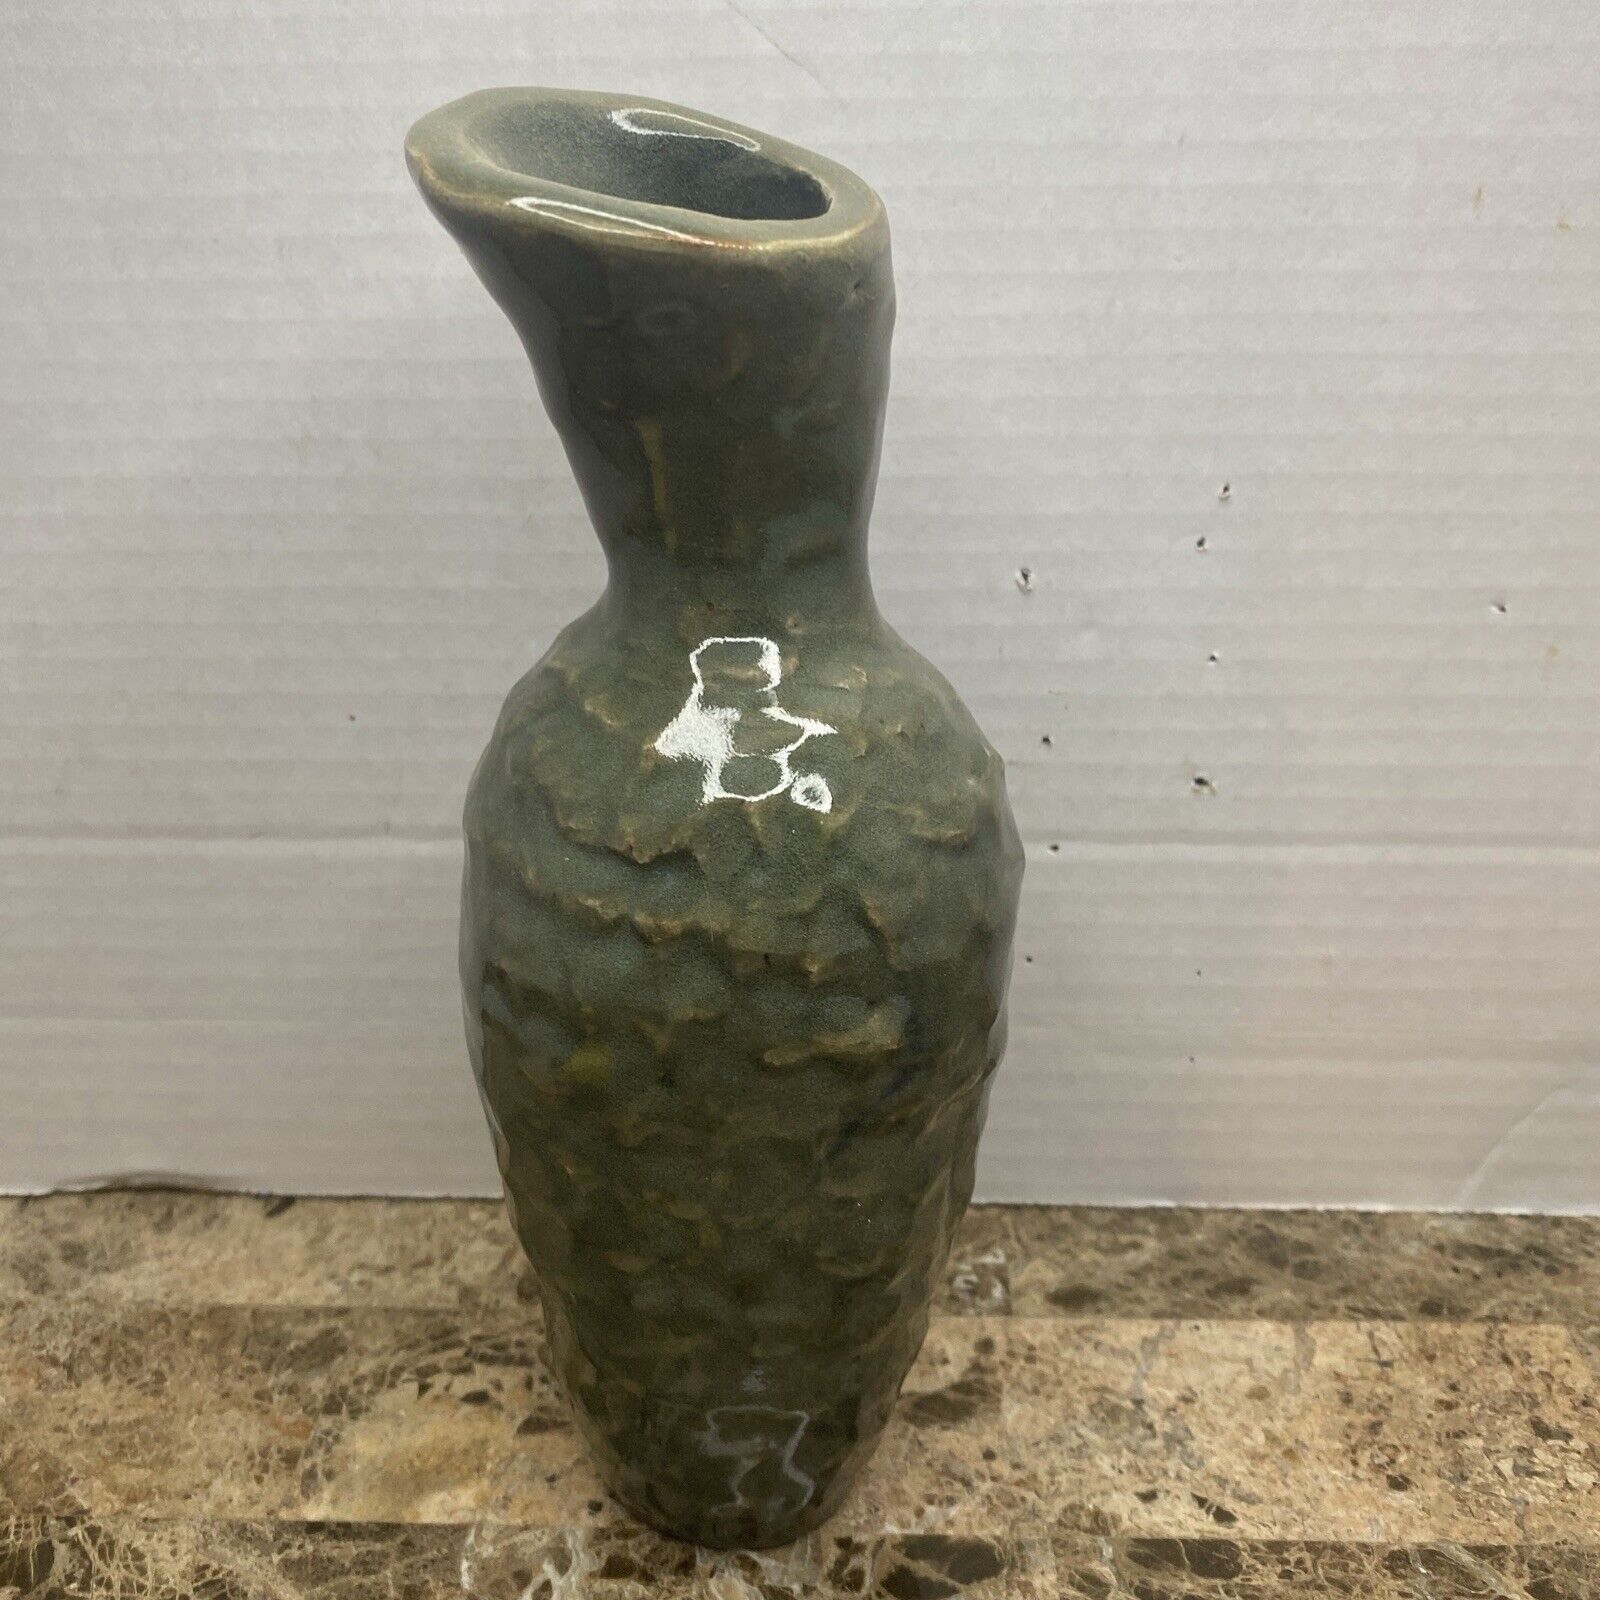 Ceramic Bottle Green Glaze Vase With MM 2004 Signed On Bottom